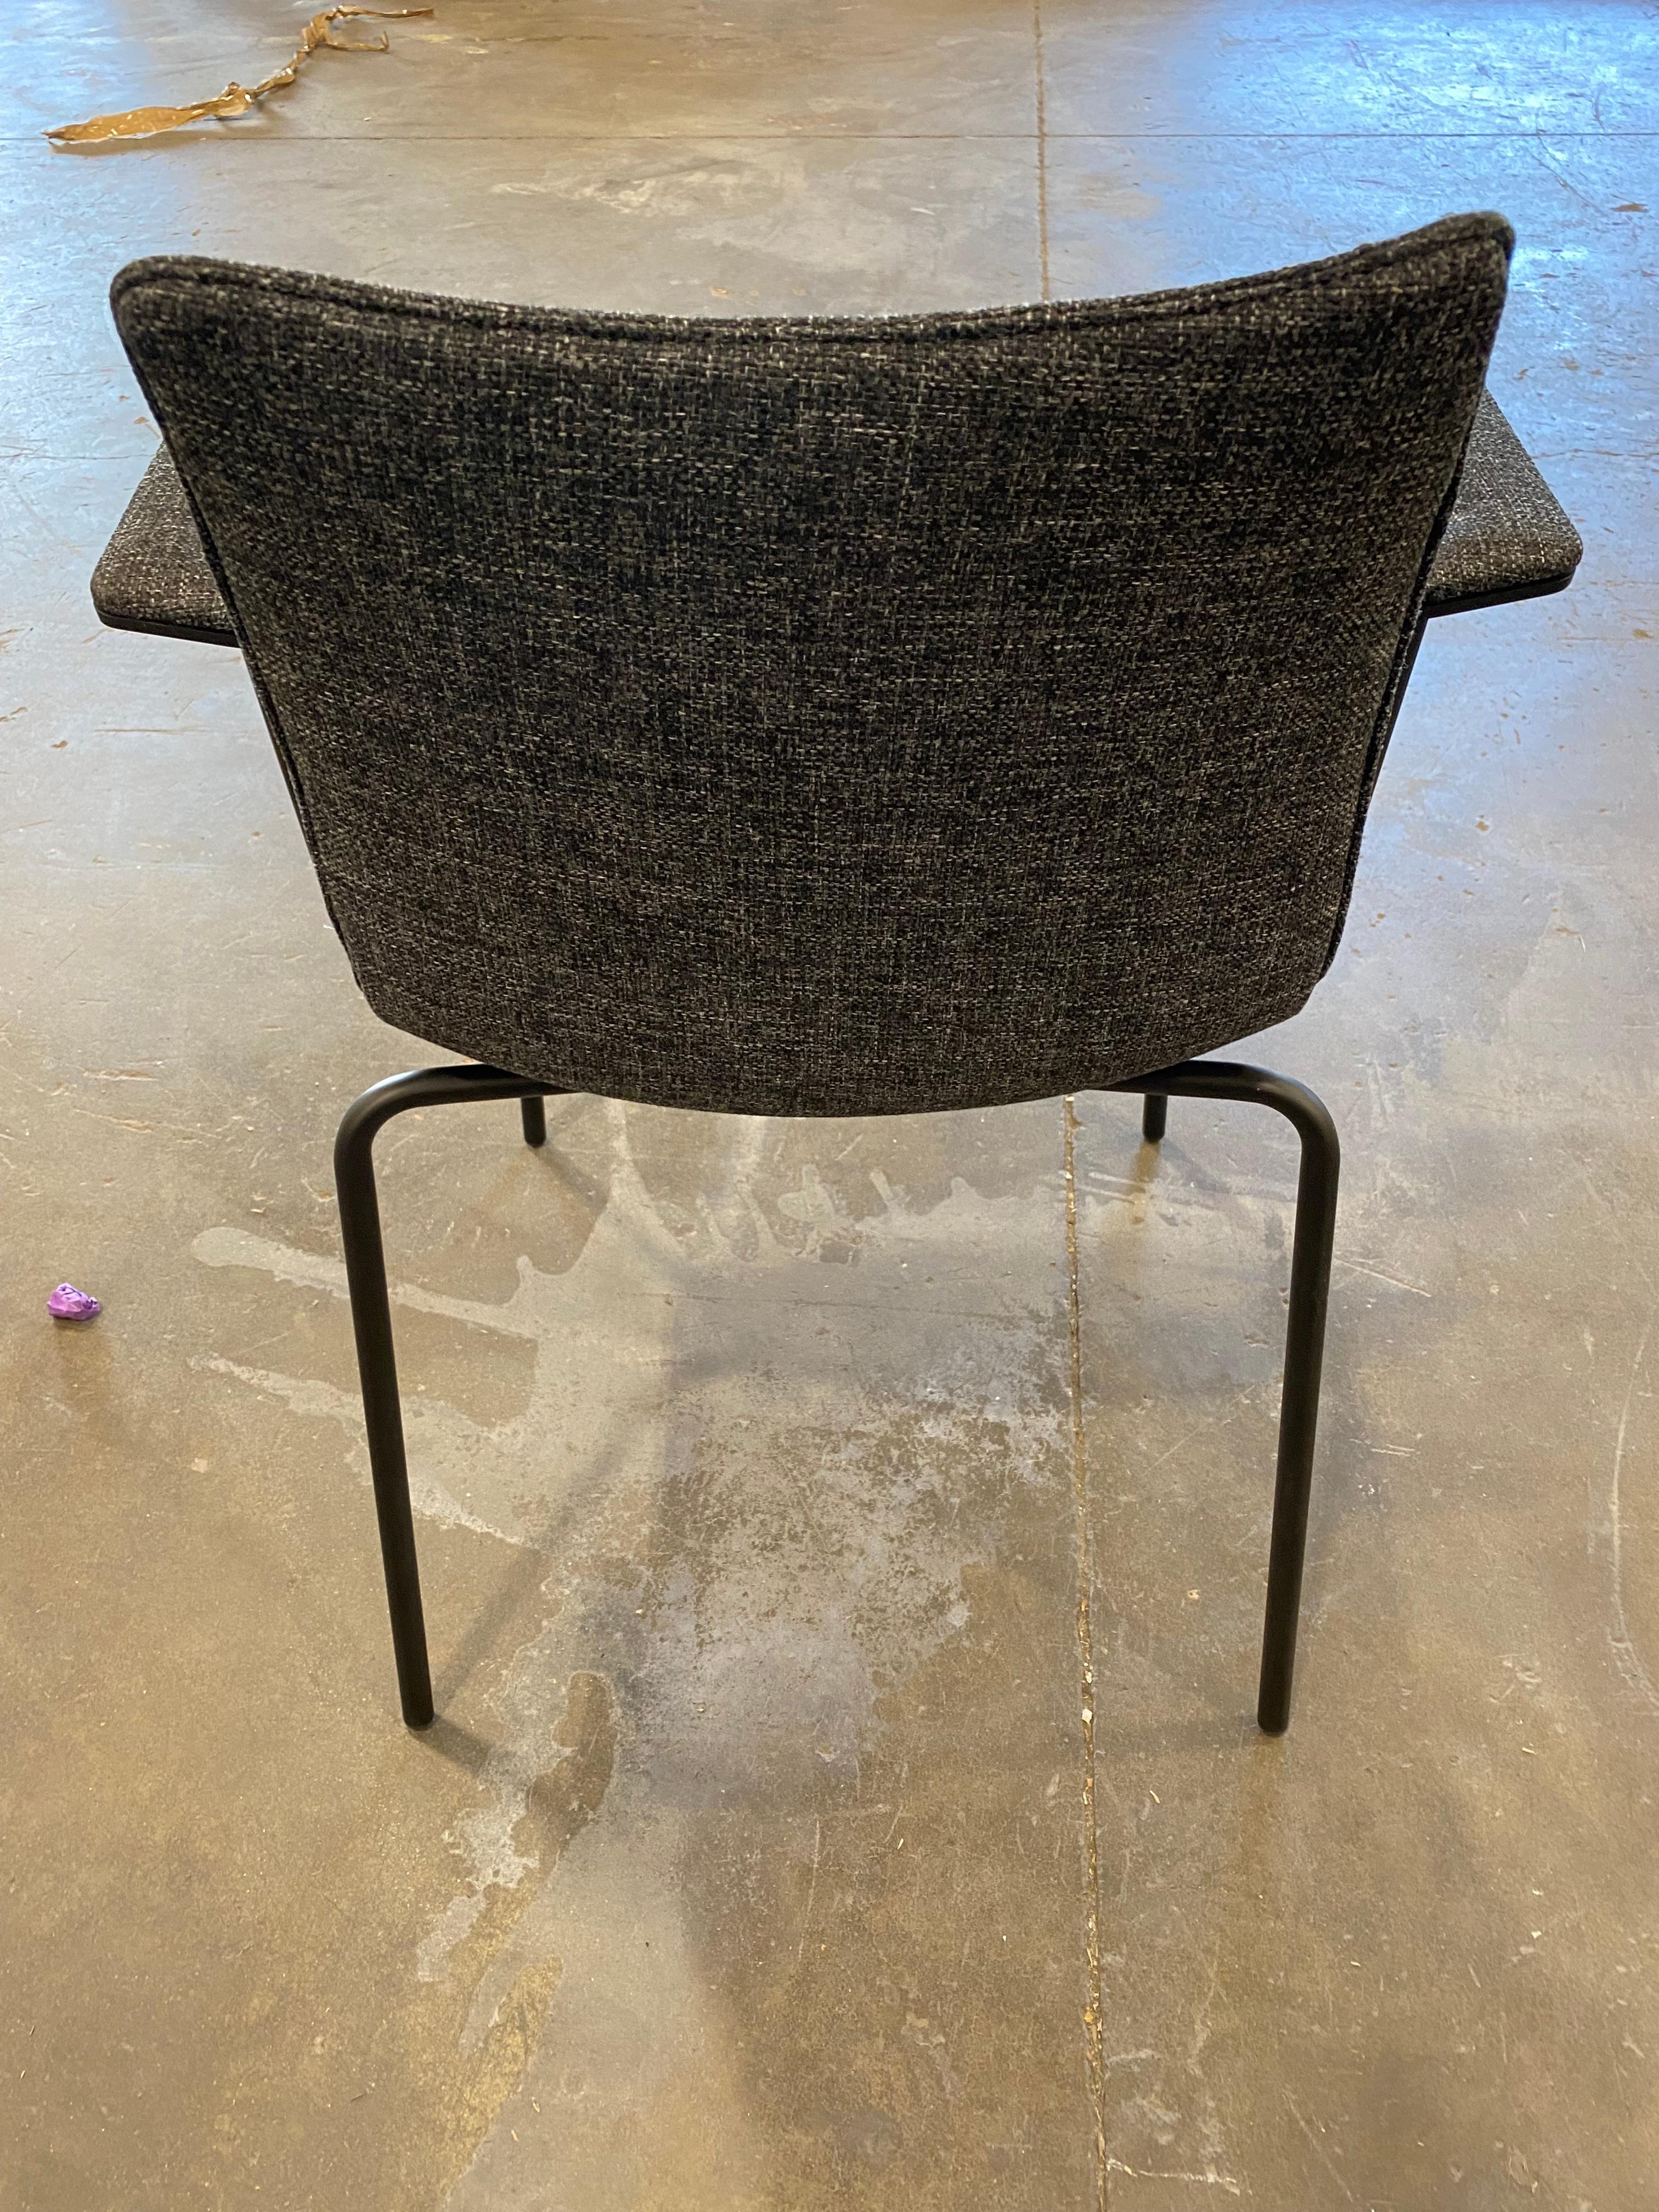 Sessel mit Naht.
gepolsterte Arme
Schale & Arme gepolstert in Trevi A 3000 # 3623 
Rahmen: schwarze Pulverbeschichtung